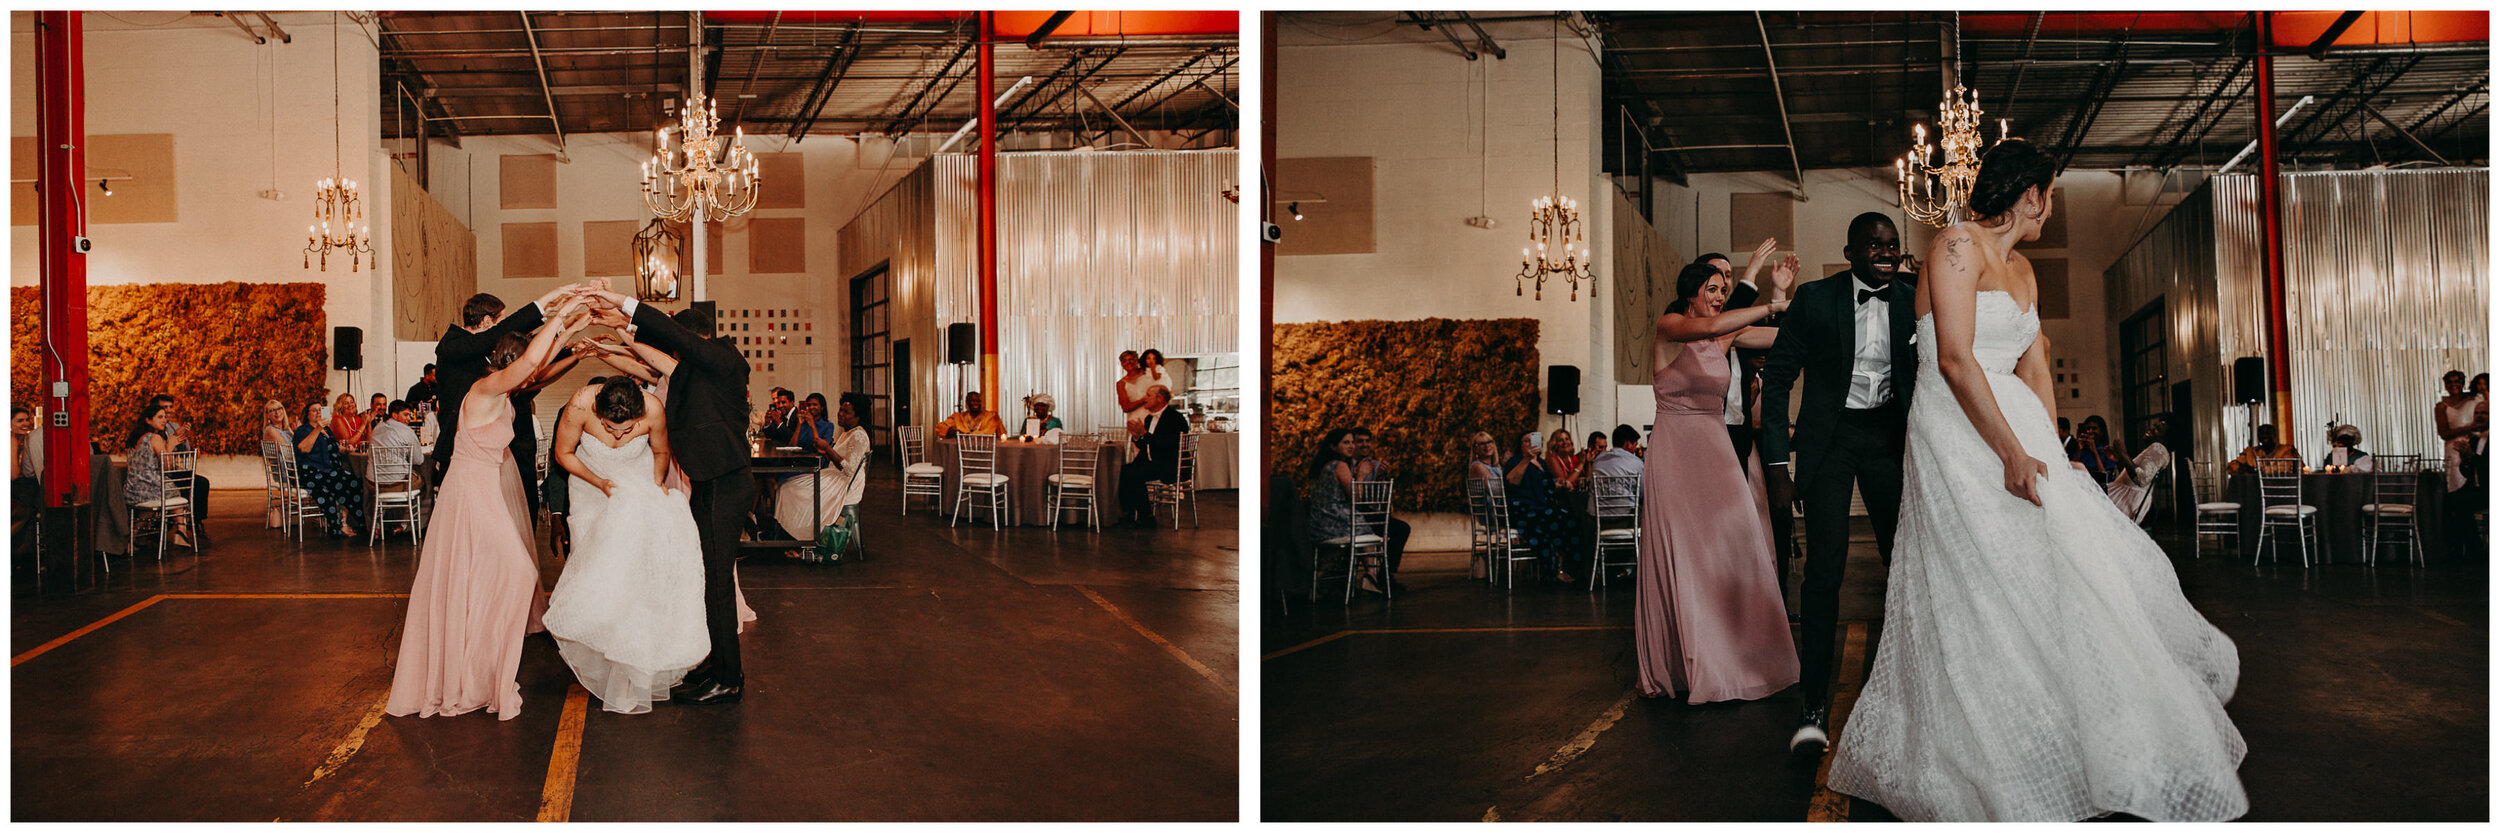 Monday Night Garage Wedding - Atlanta,Ga - Aline Marin Photography59.jpg